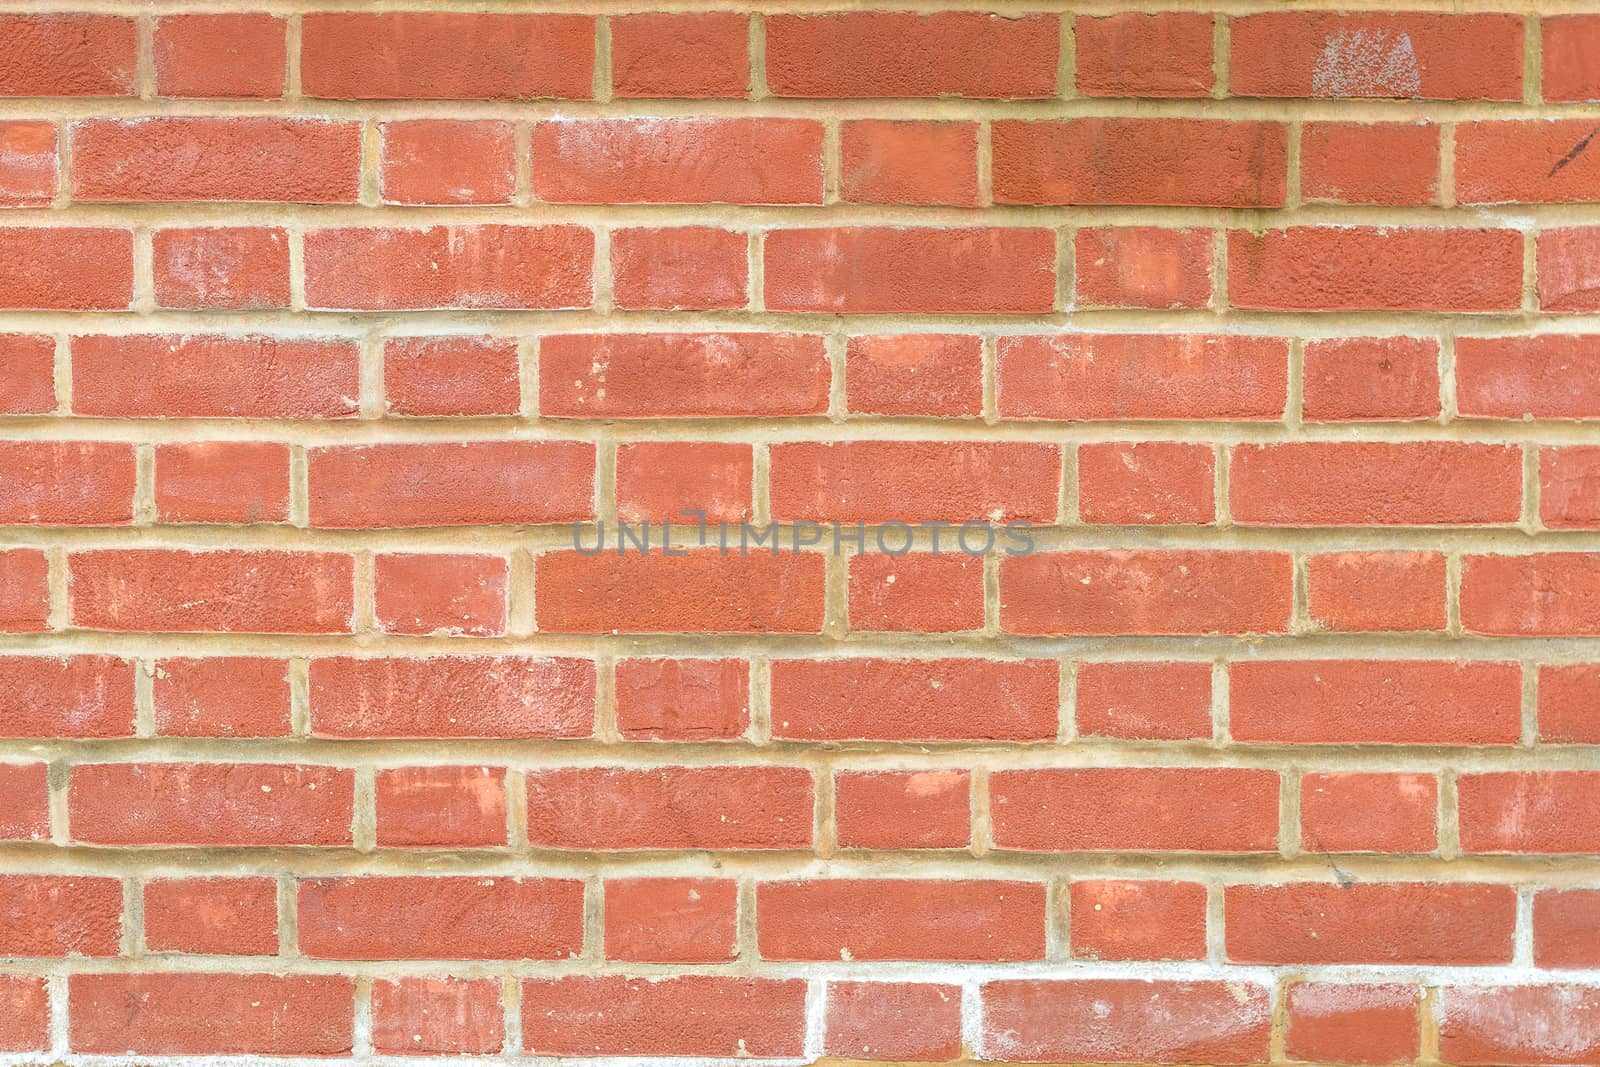 Pattern of a brick wall by noimagination